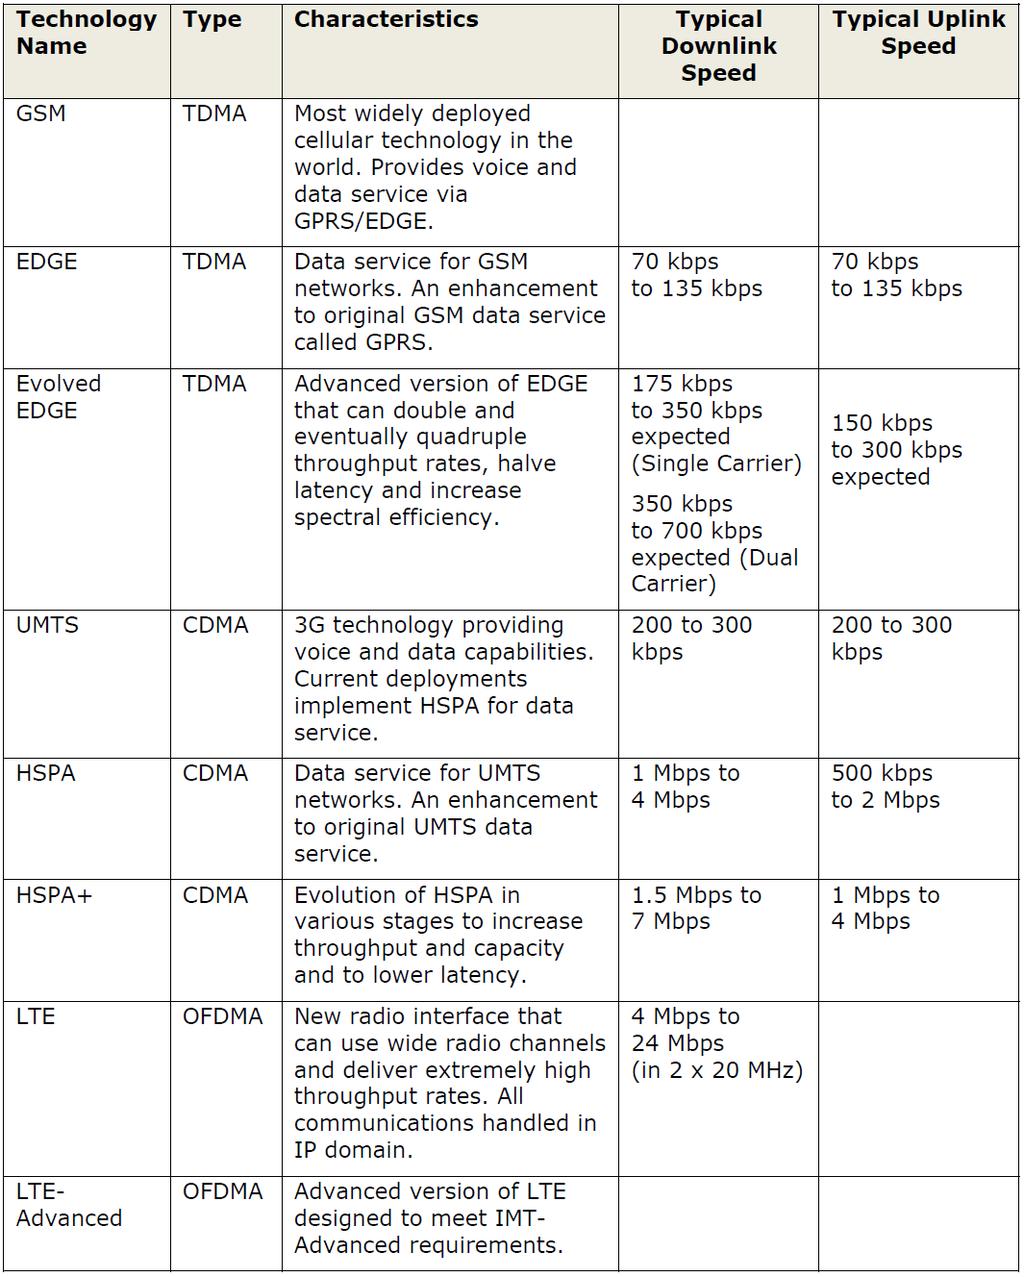 Characteristics of 3GPP Technologies 2G 2.